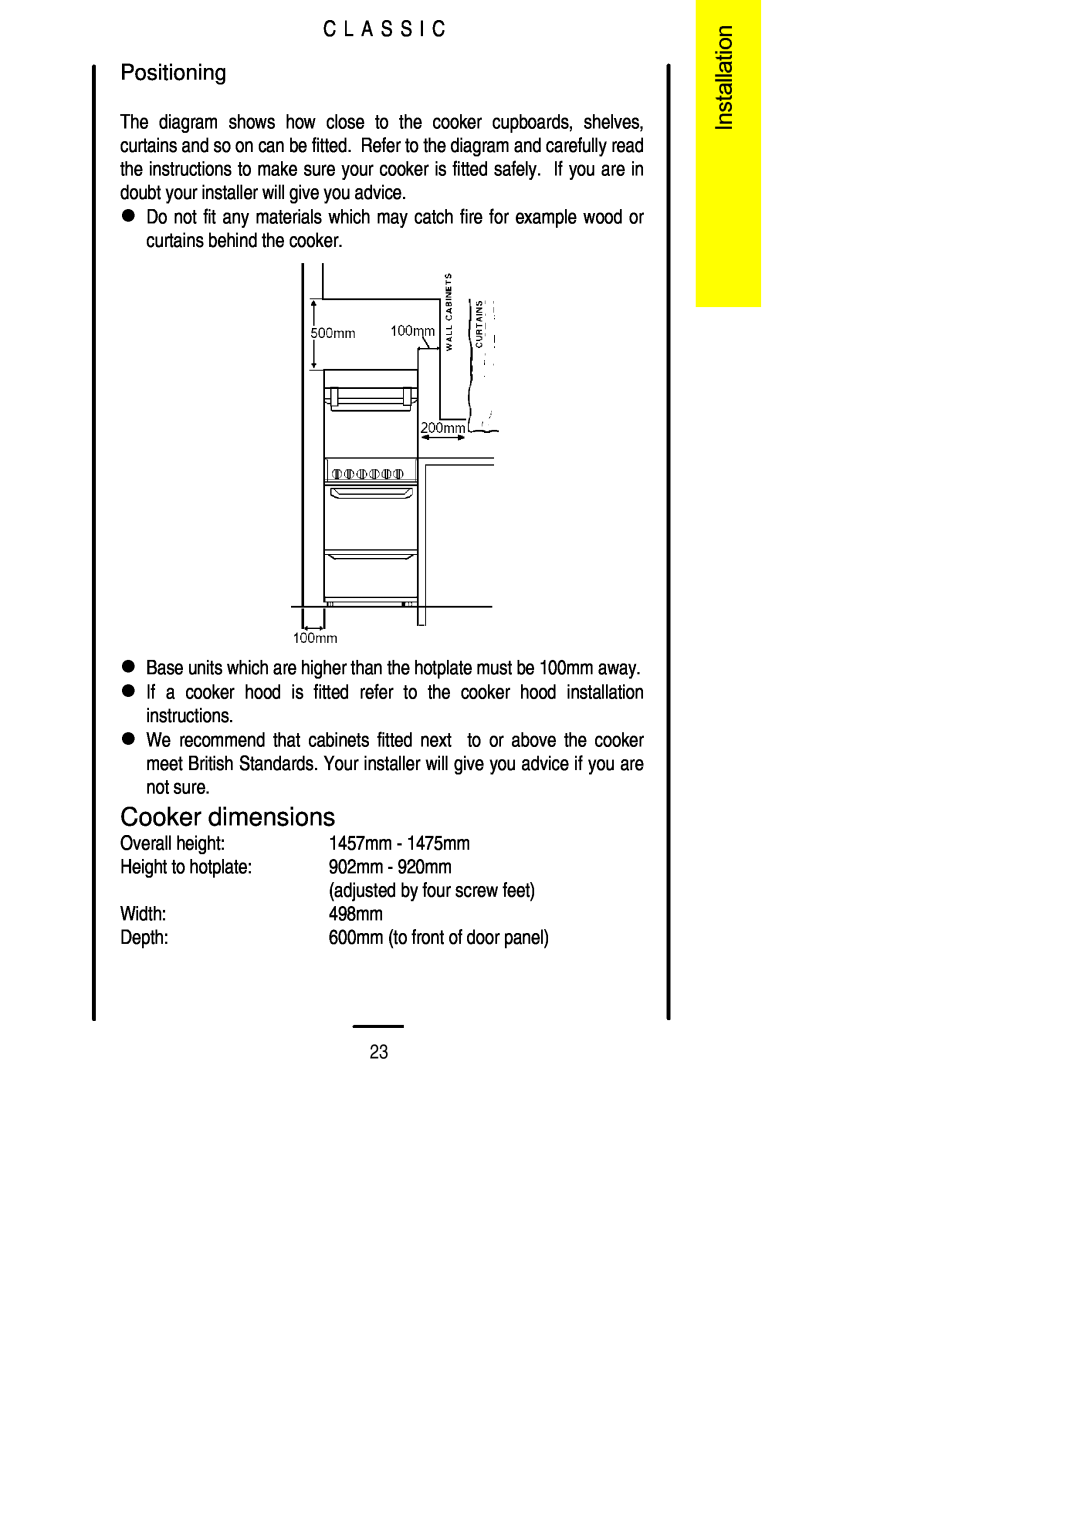 Parkinson Cowan U02021 installation instructions Cooker dimensions, C L A S S I C Positioning 